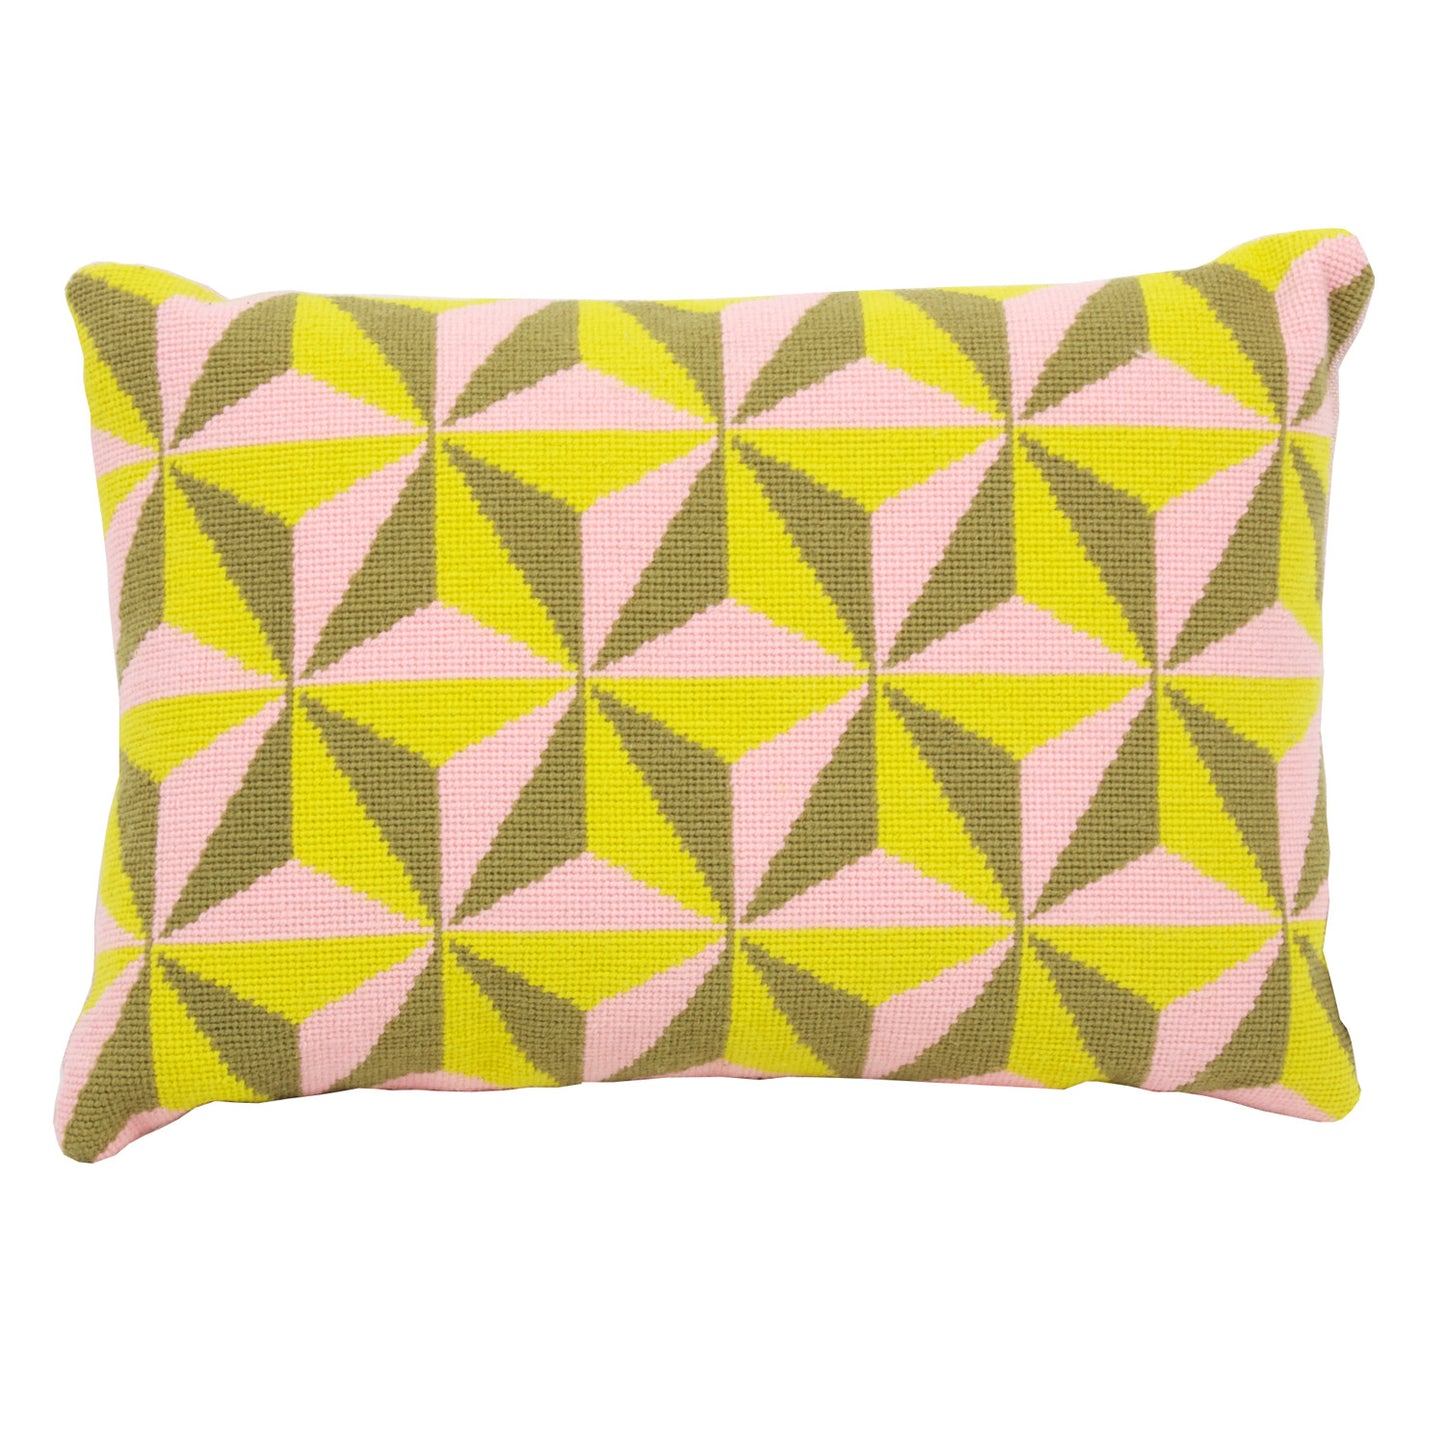 Tetrahedron Cushion - Yellow